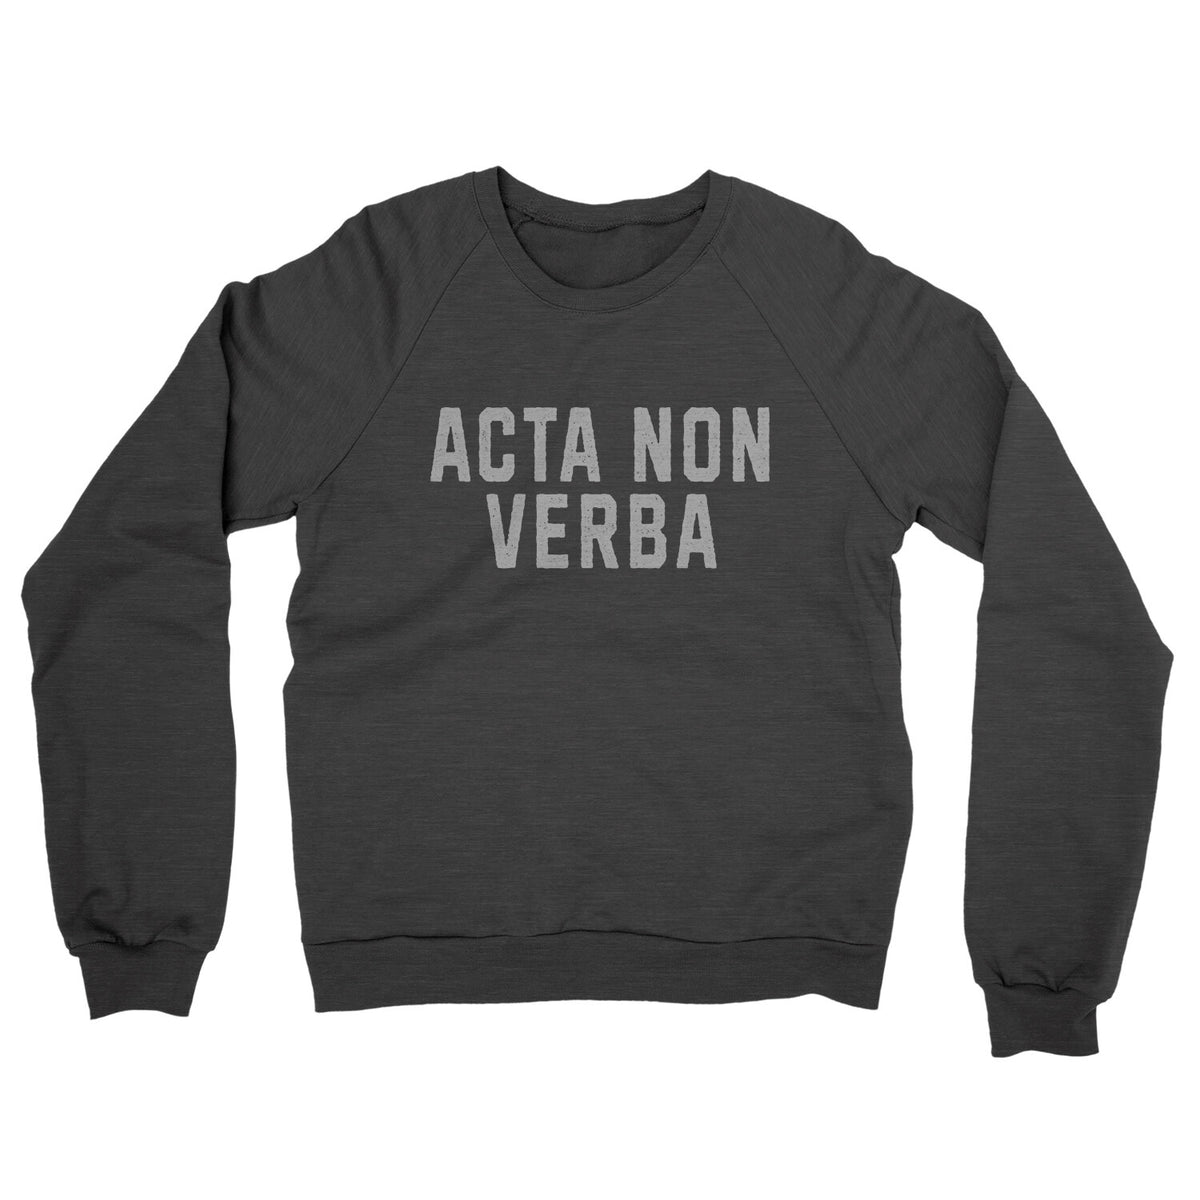 Acta Non Verba in Charcoal Heather Color